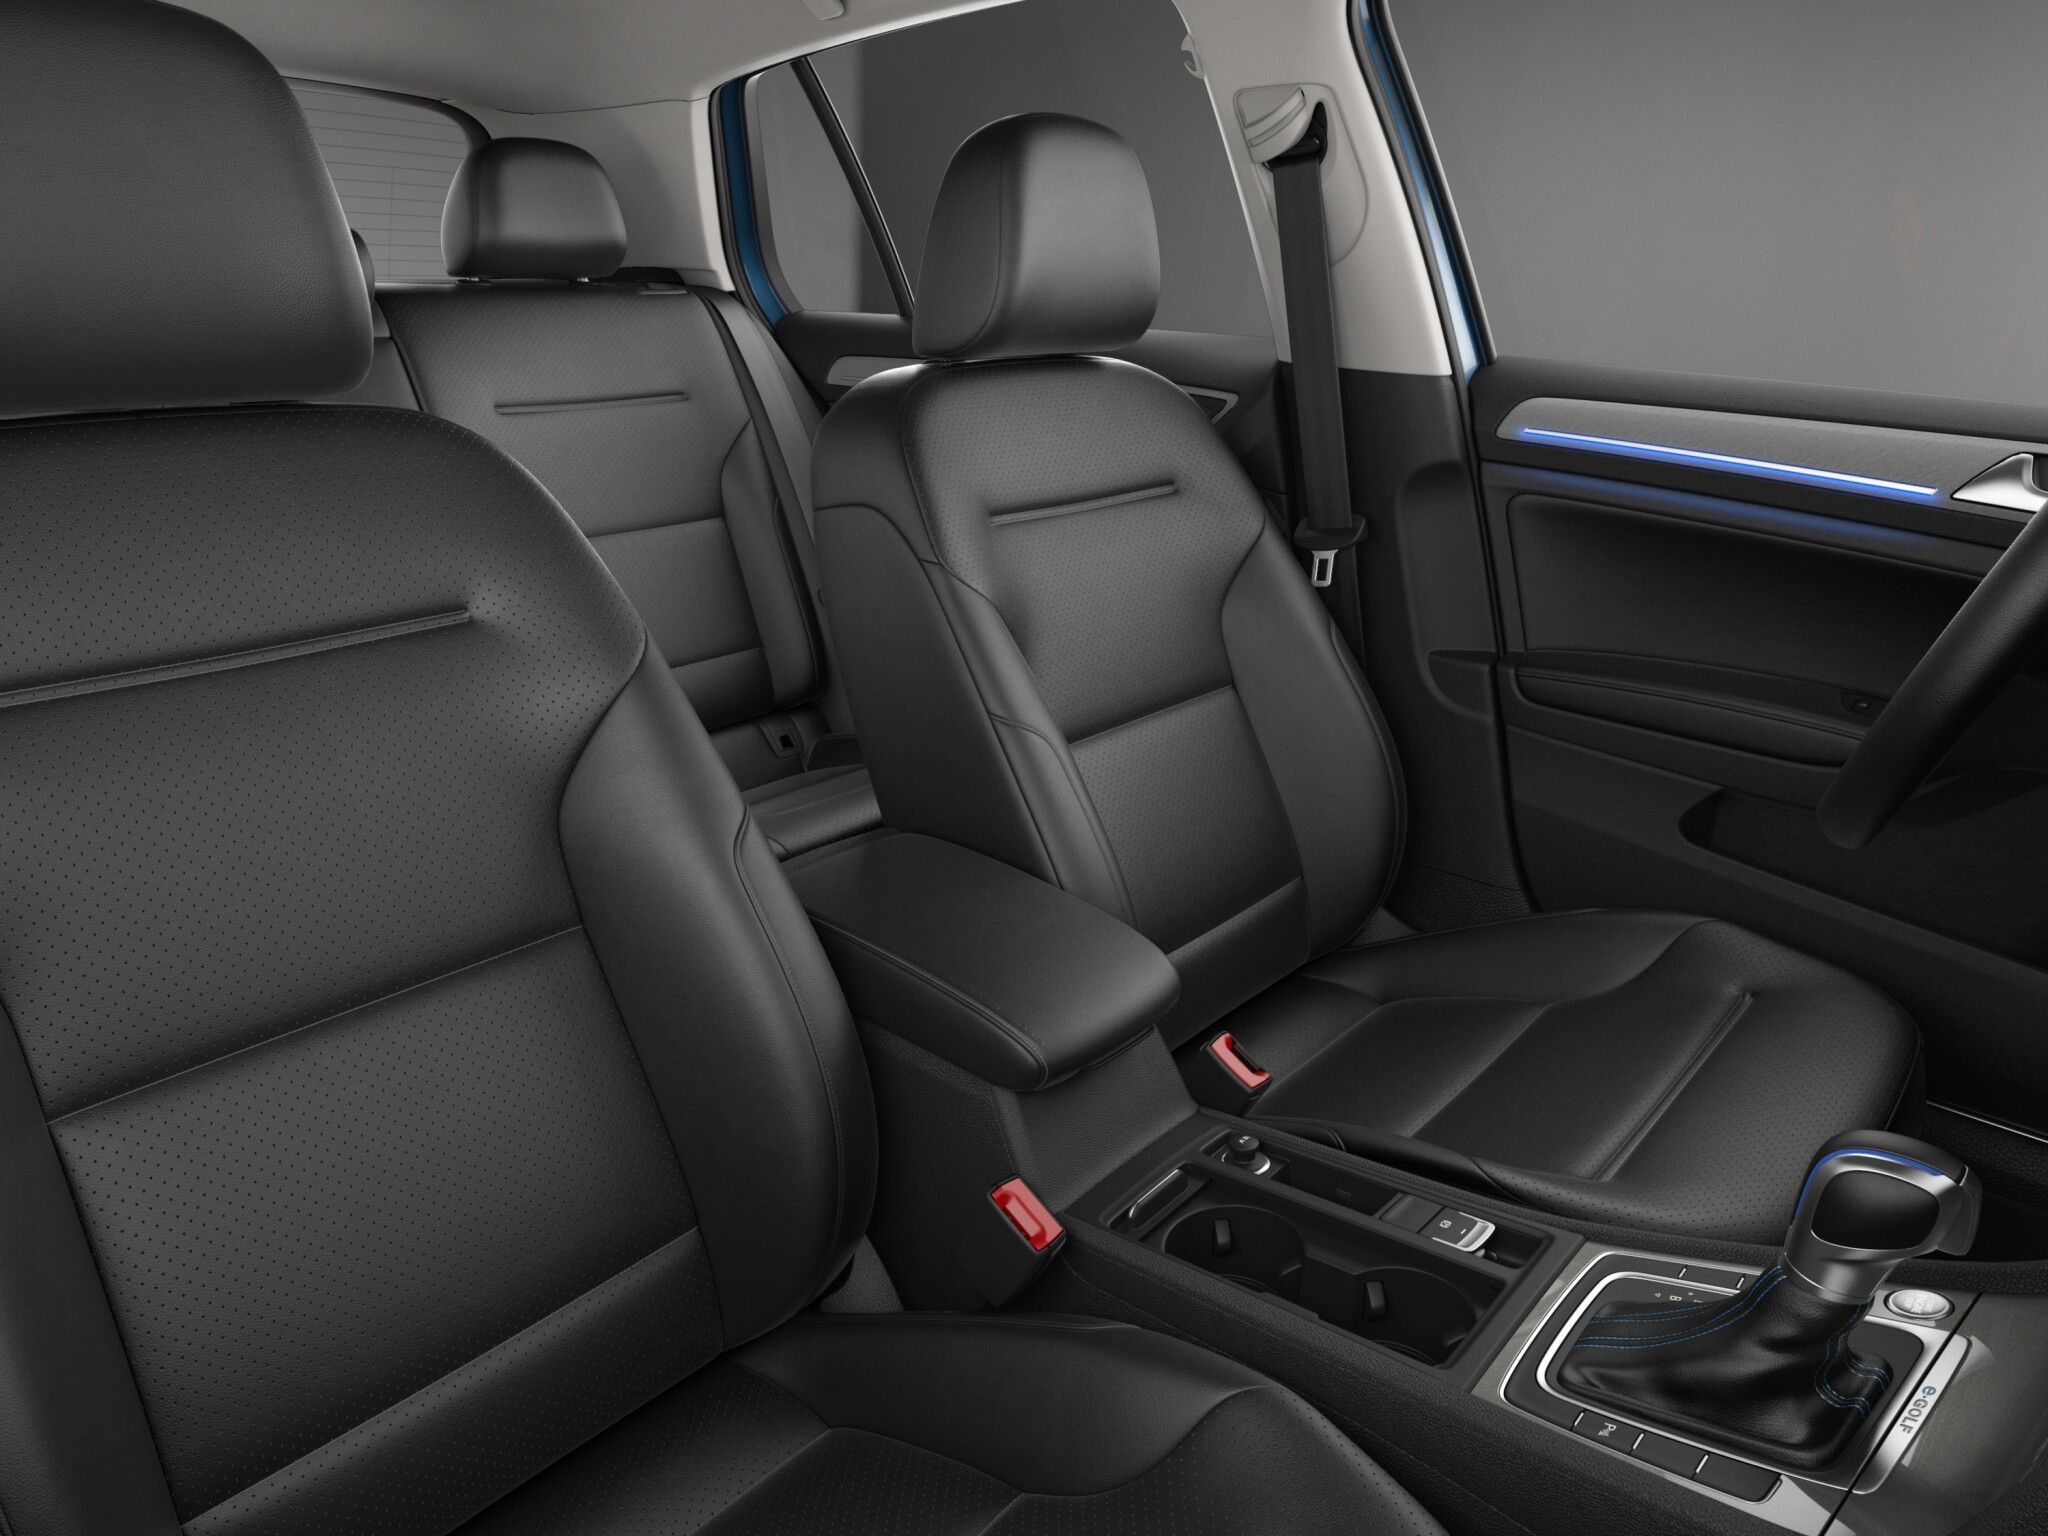 2016 Volkswagen E Golf Front Seats Interior (View 1 of 11)